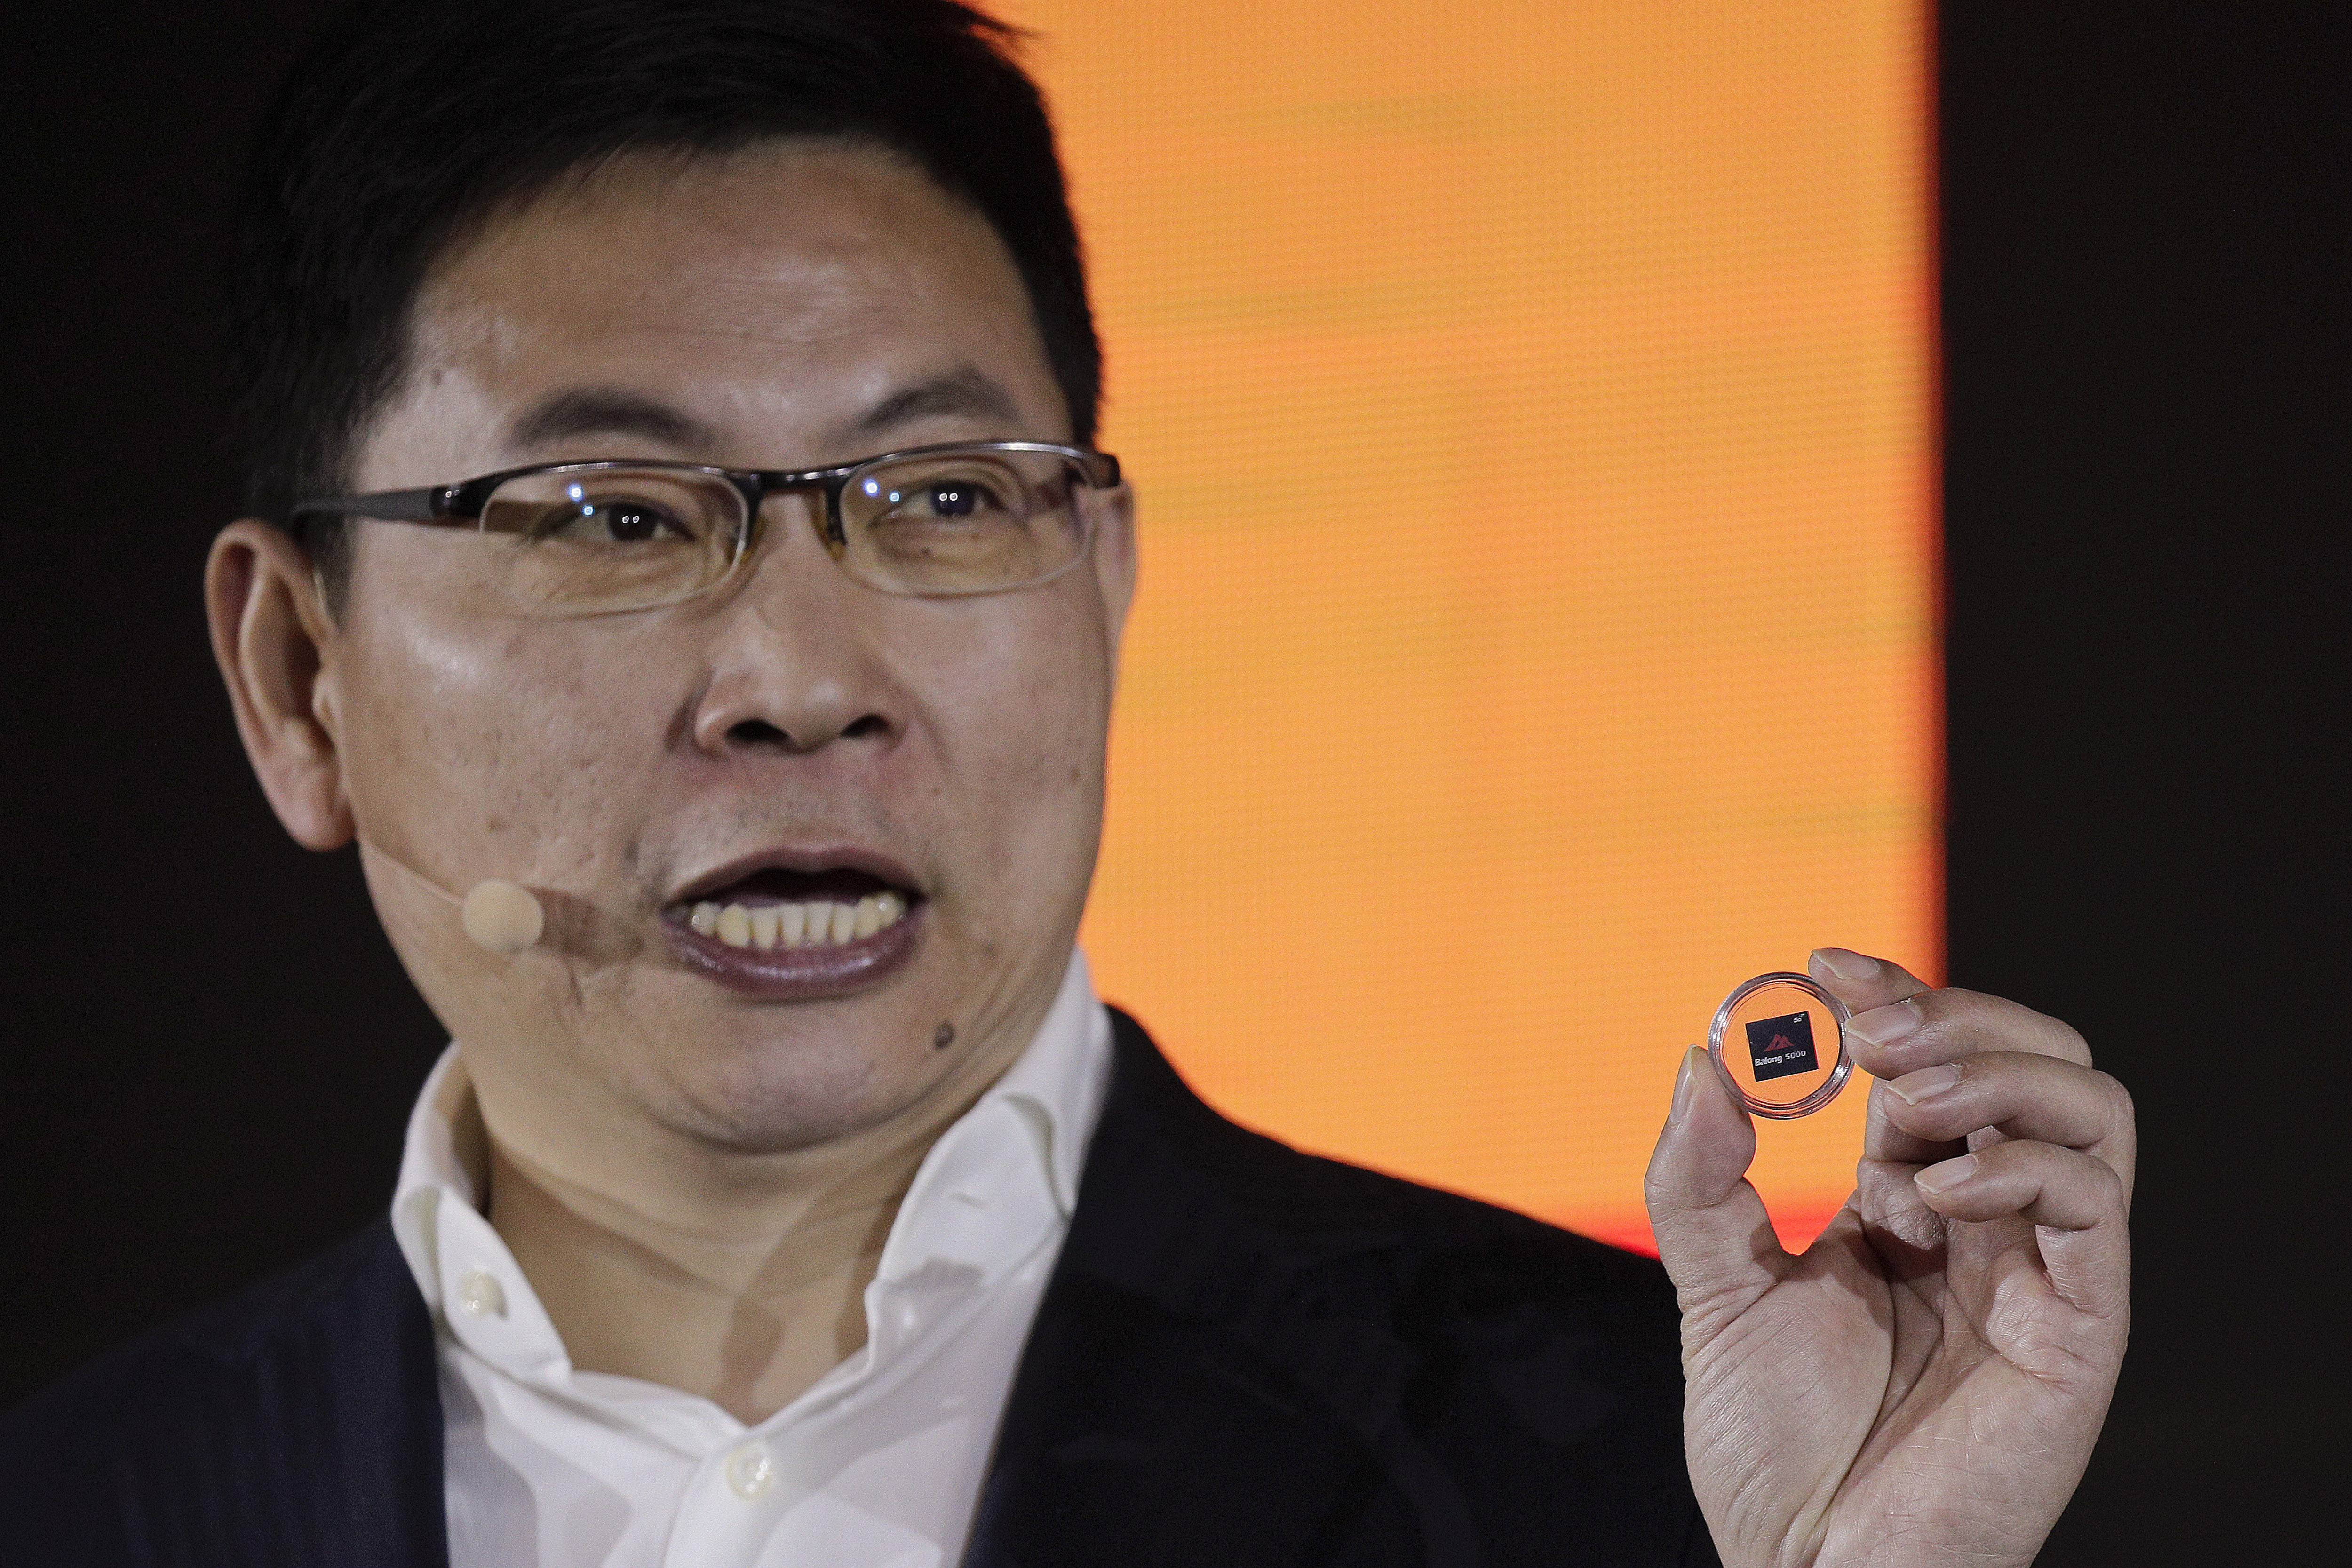 speed gun jammer doors | Huawei Announces 5G Smartphone Based on Own Technology